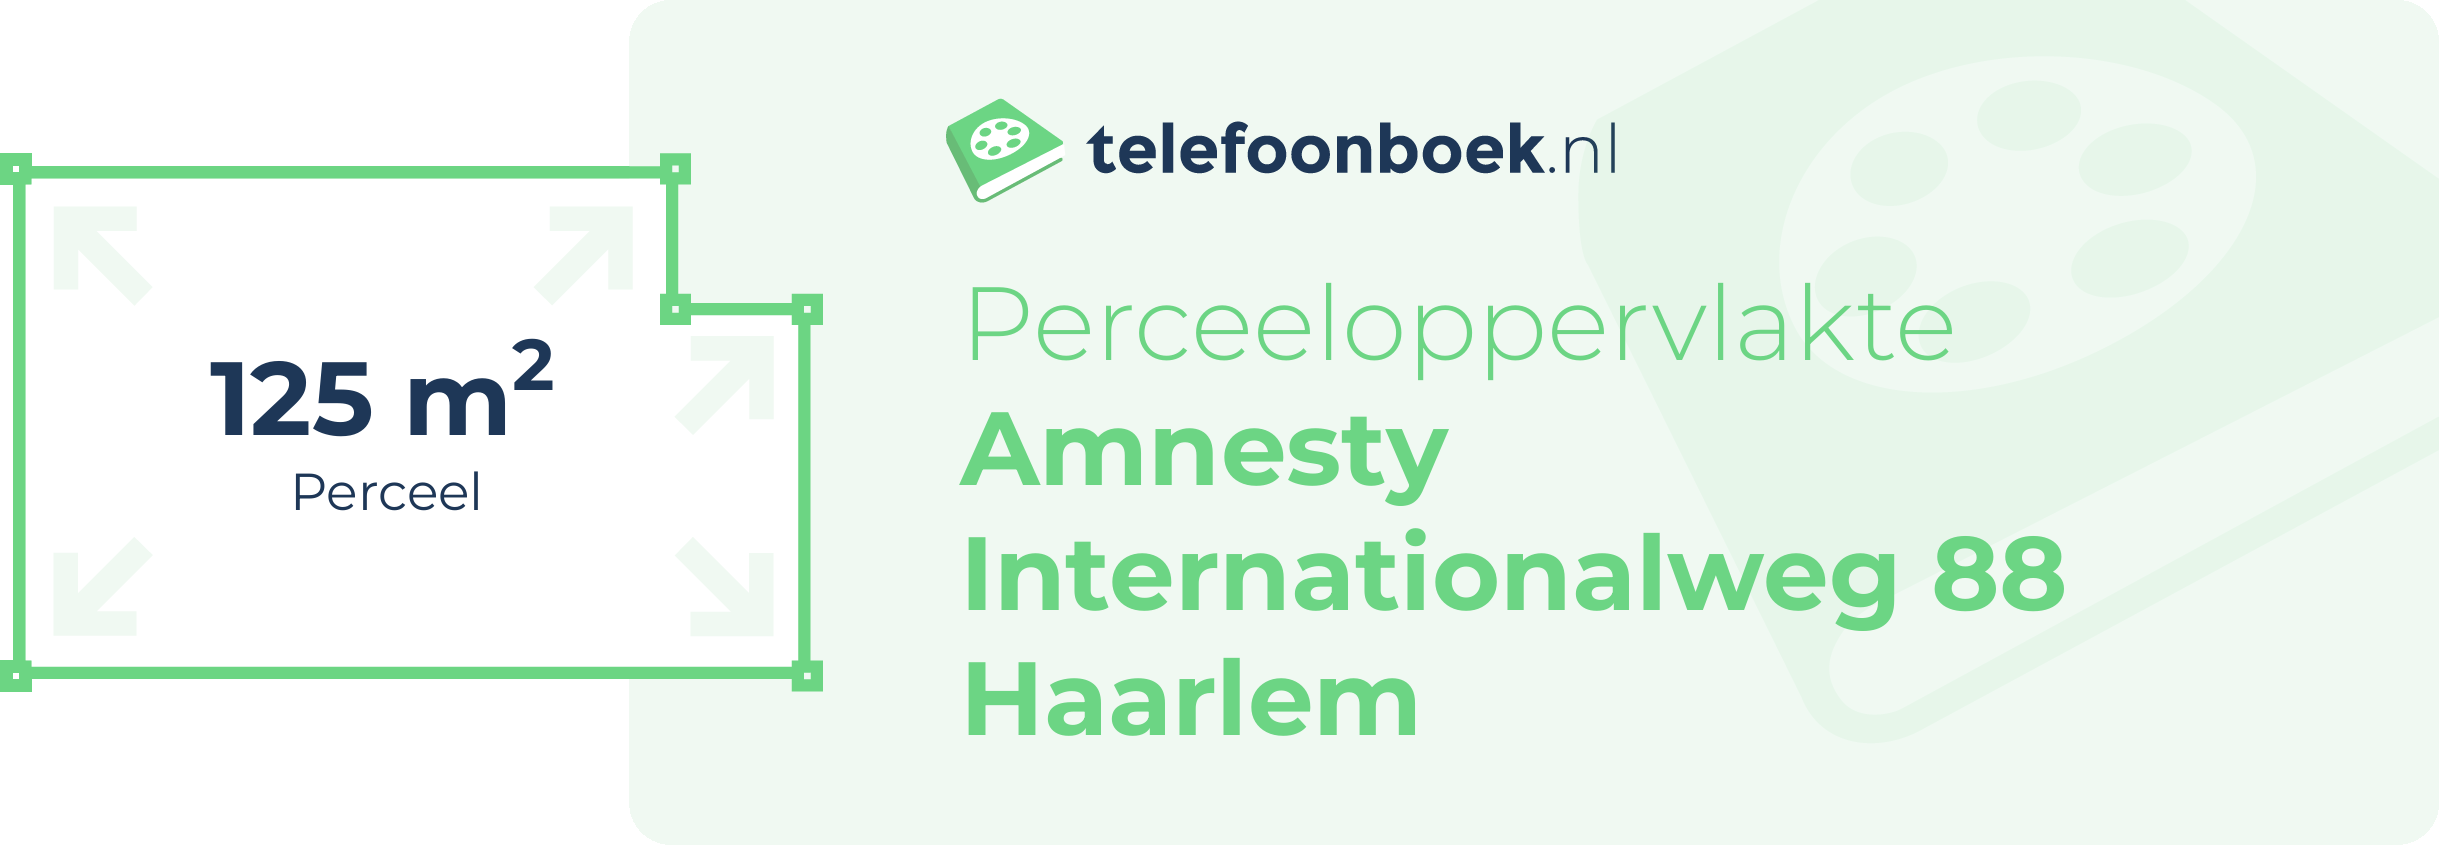 Perceeloppervlakte Amnesty Internationalweg 88 Haarlem